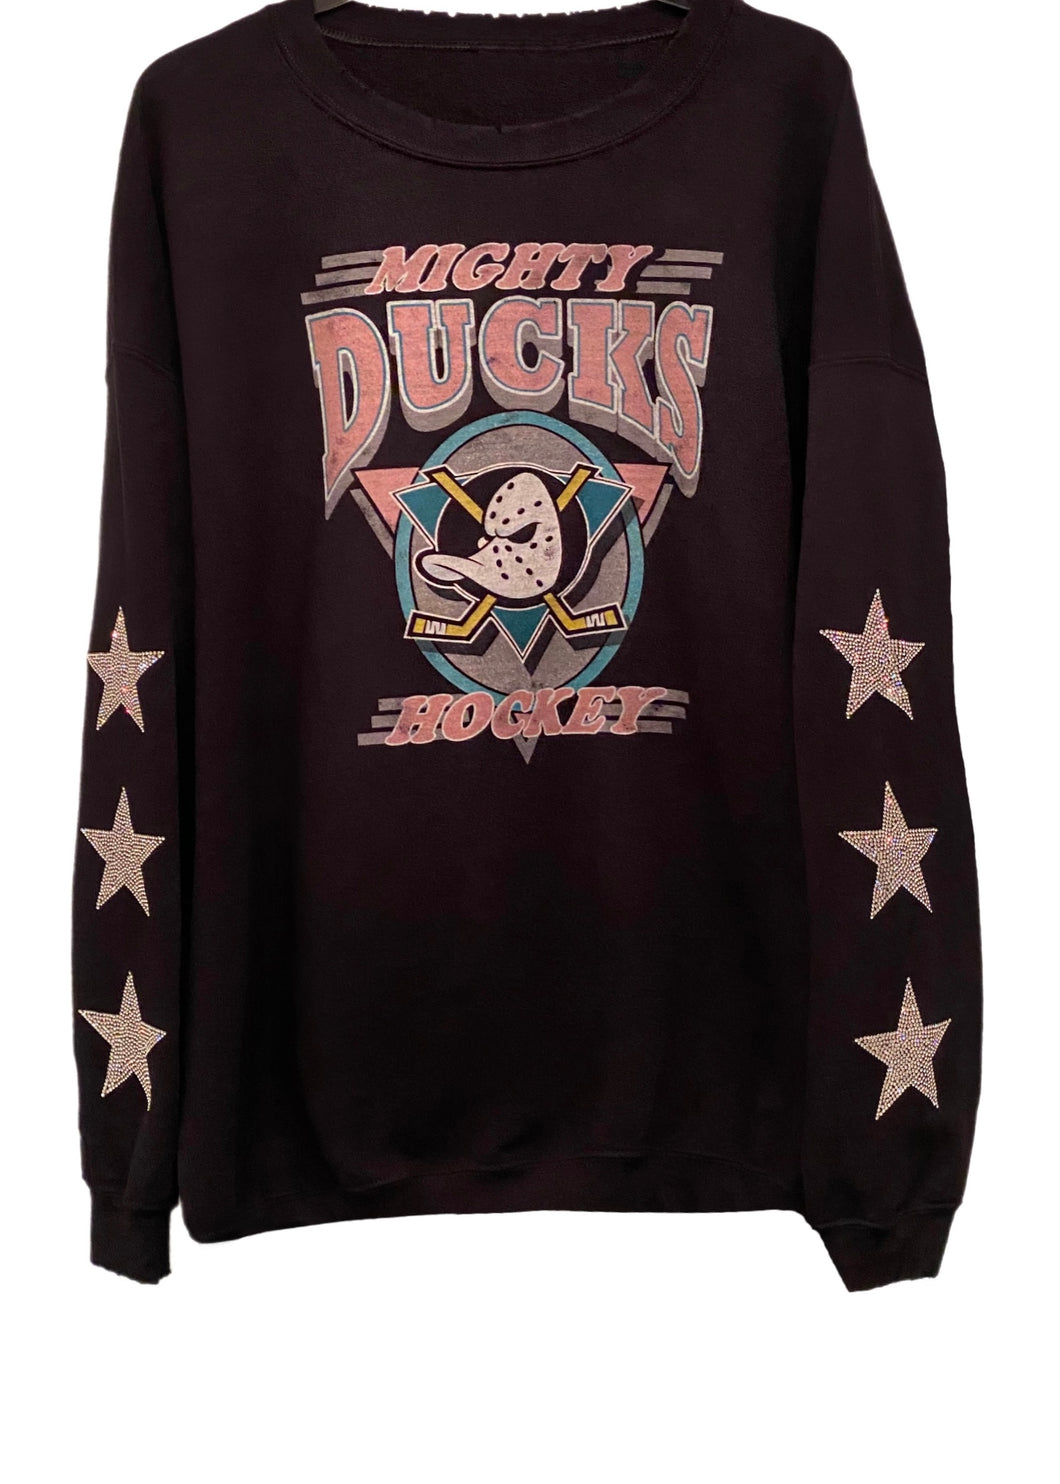 Anaheim Ducks, NHL One of a KIND Vintage “Mighty Ducks” Sweatshirt with Three Crystal Star Design